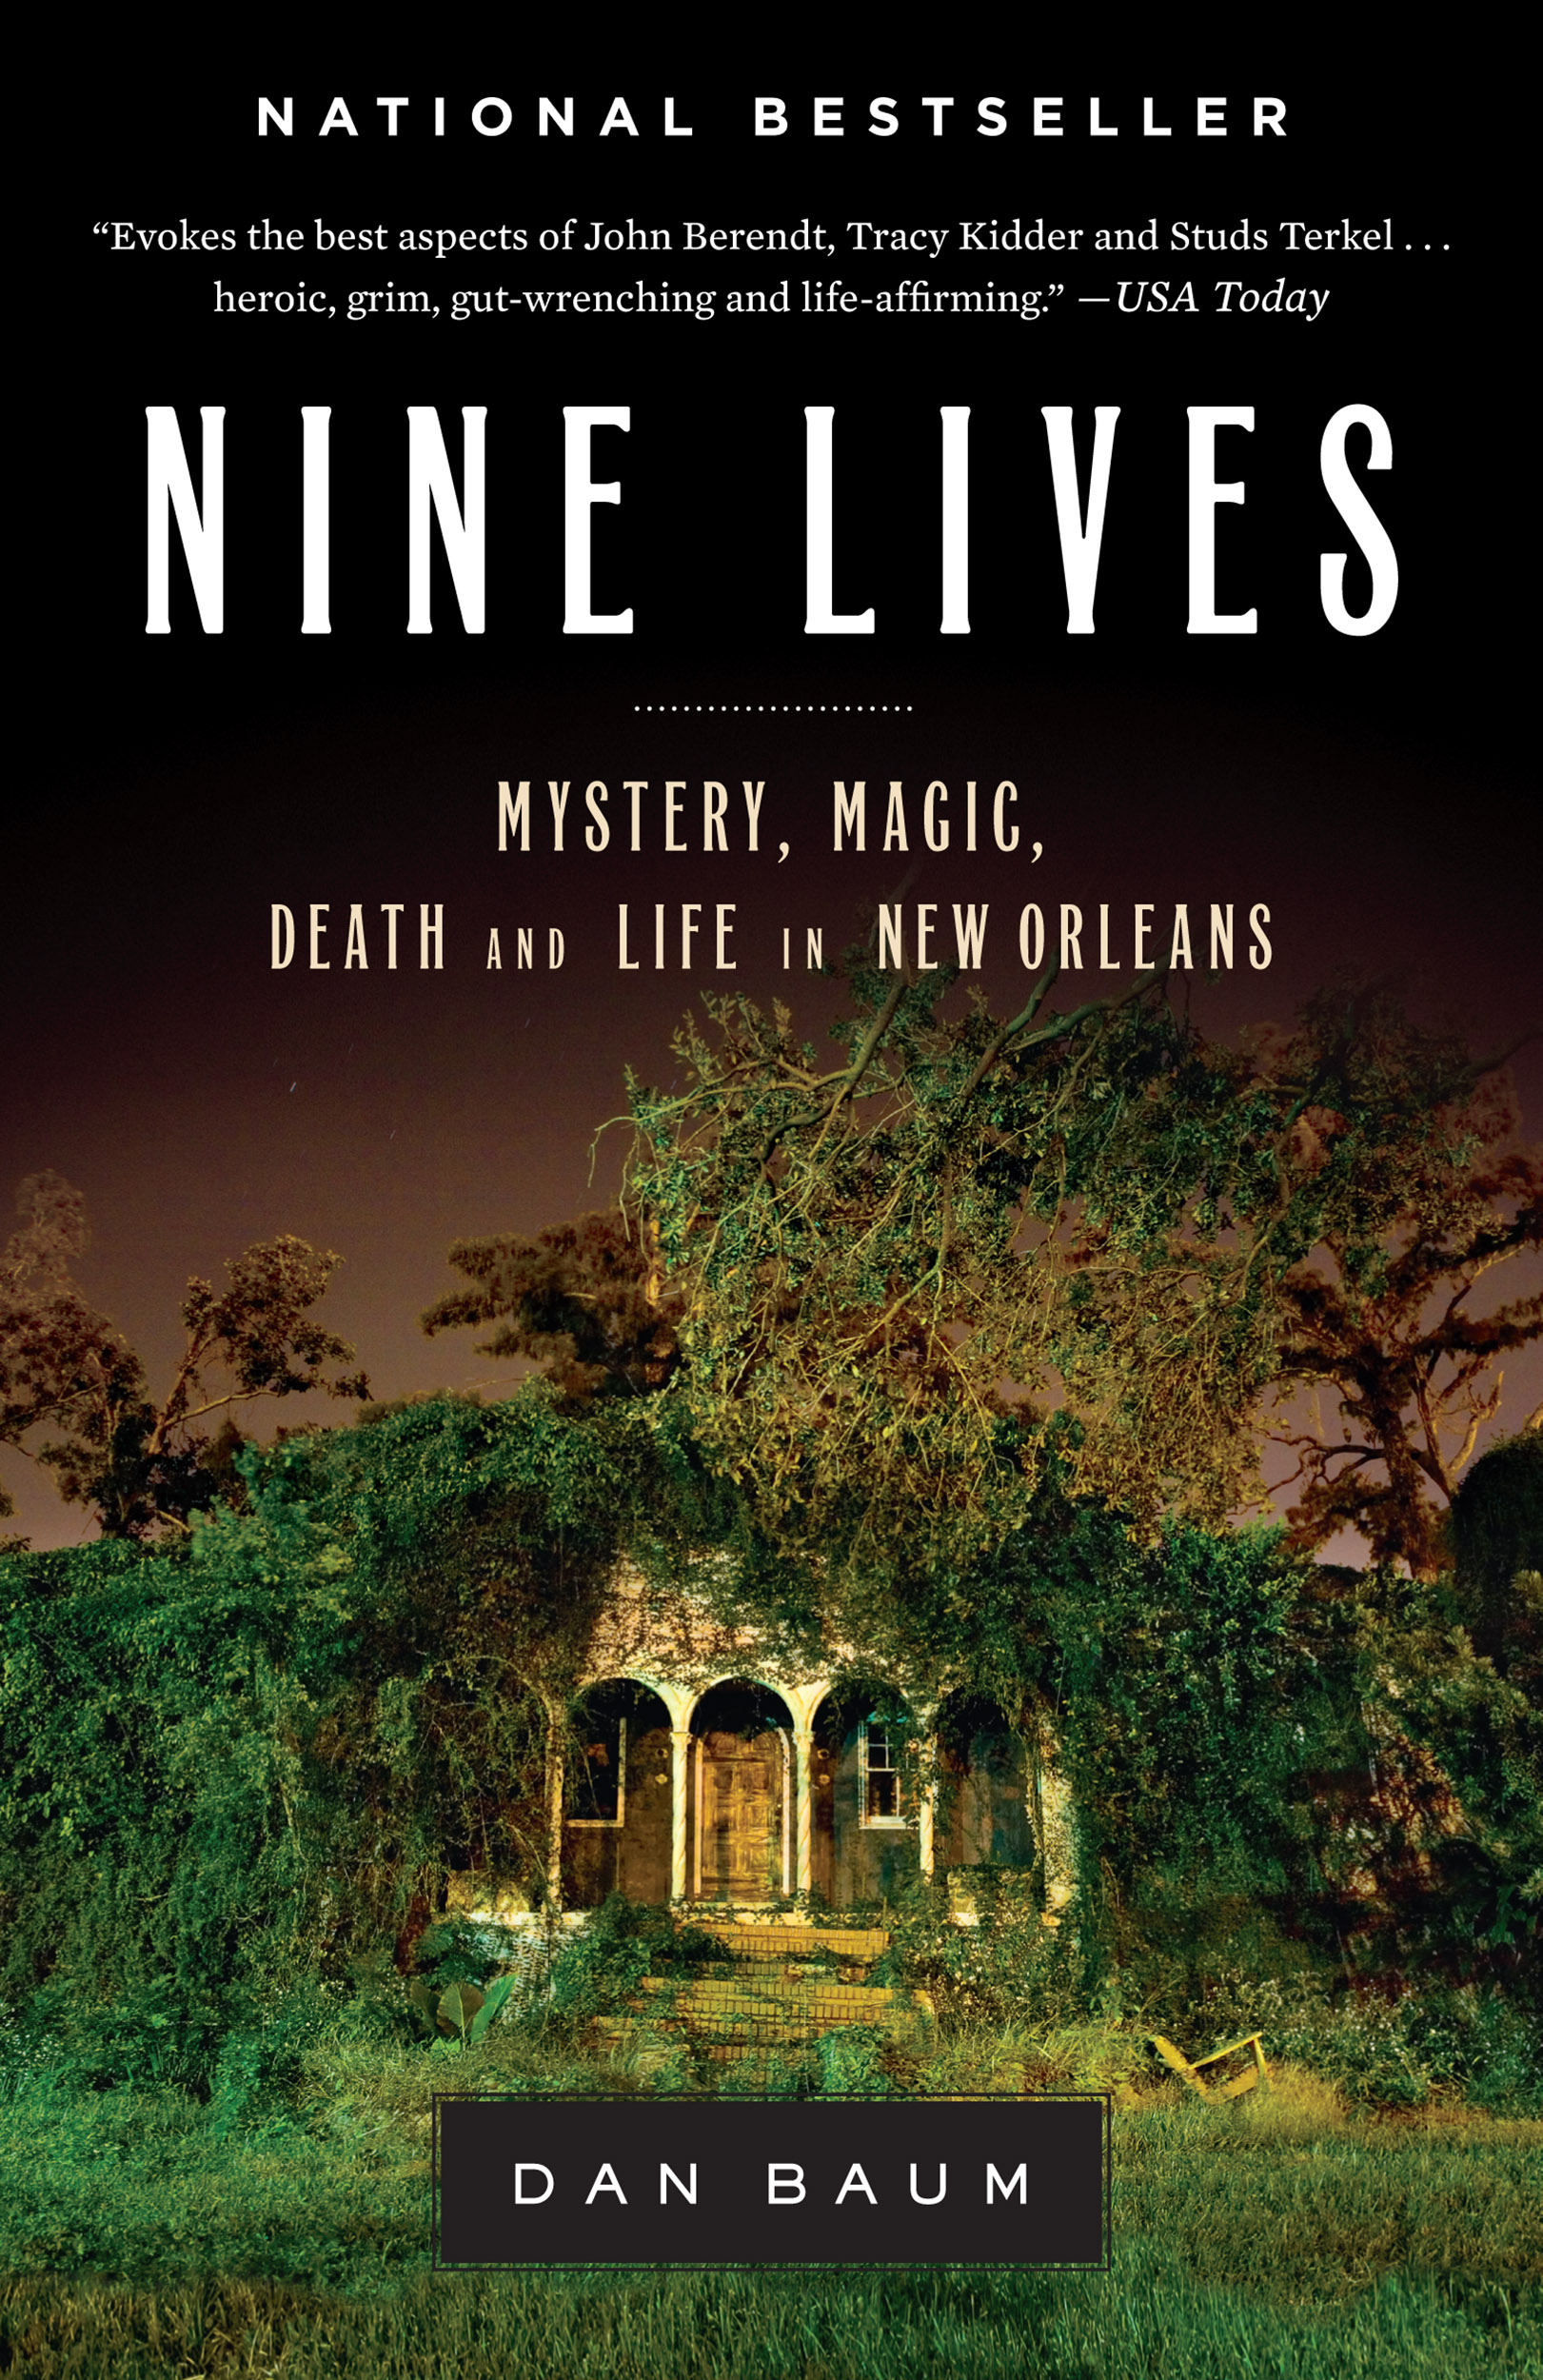 Book cover: "Nine Lives."